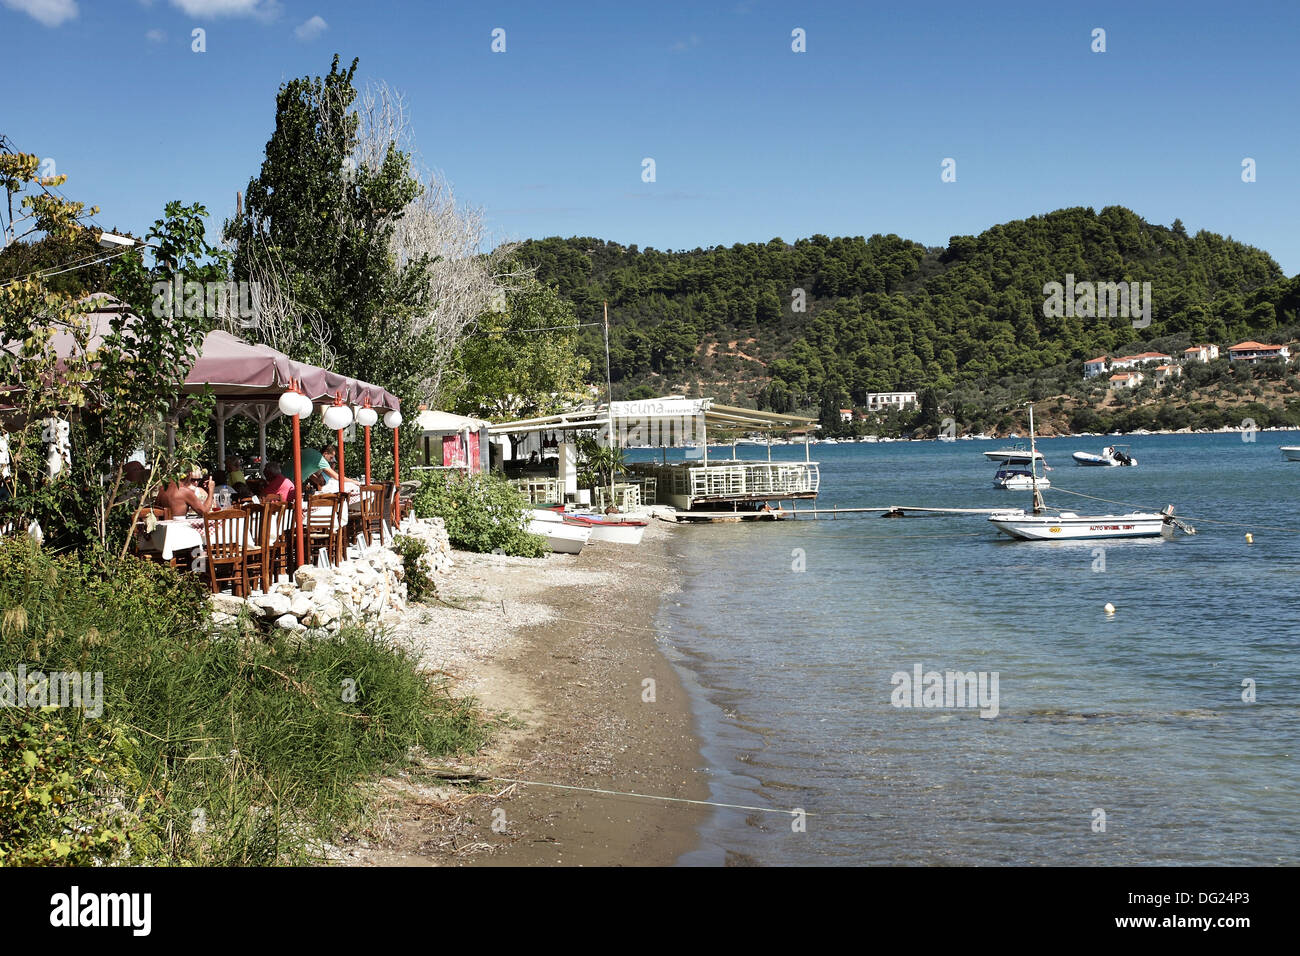 A beach front Taverna in Skiathos Town on the Greek Island of Skiathos, a popular tourist destination in the Aegean Sea. Stock Photo